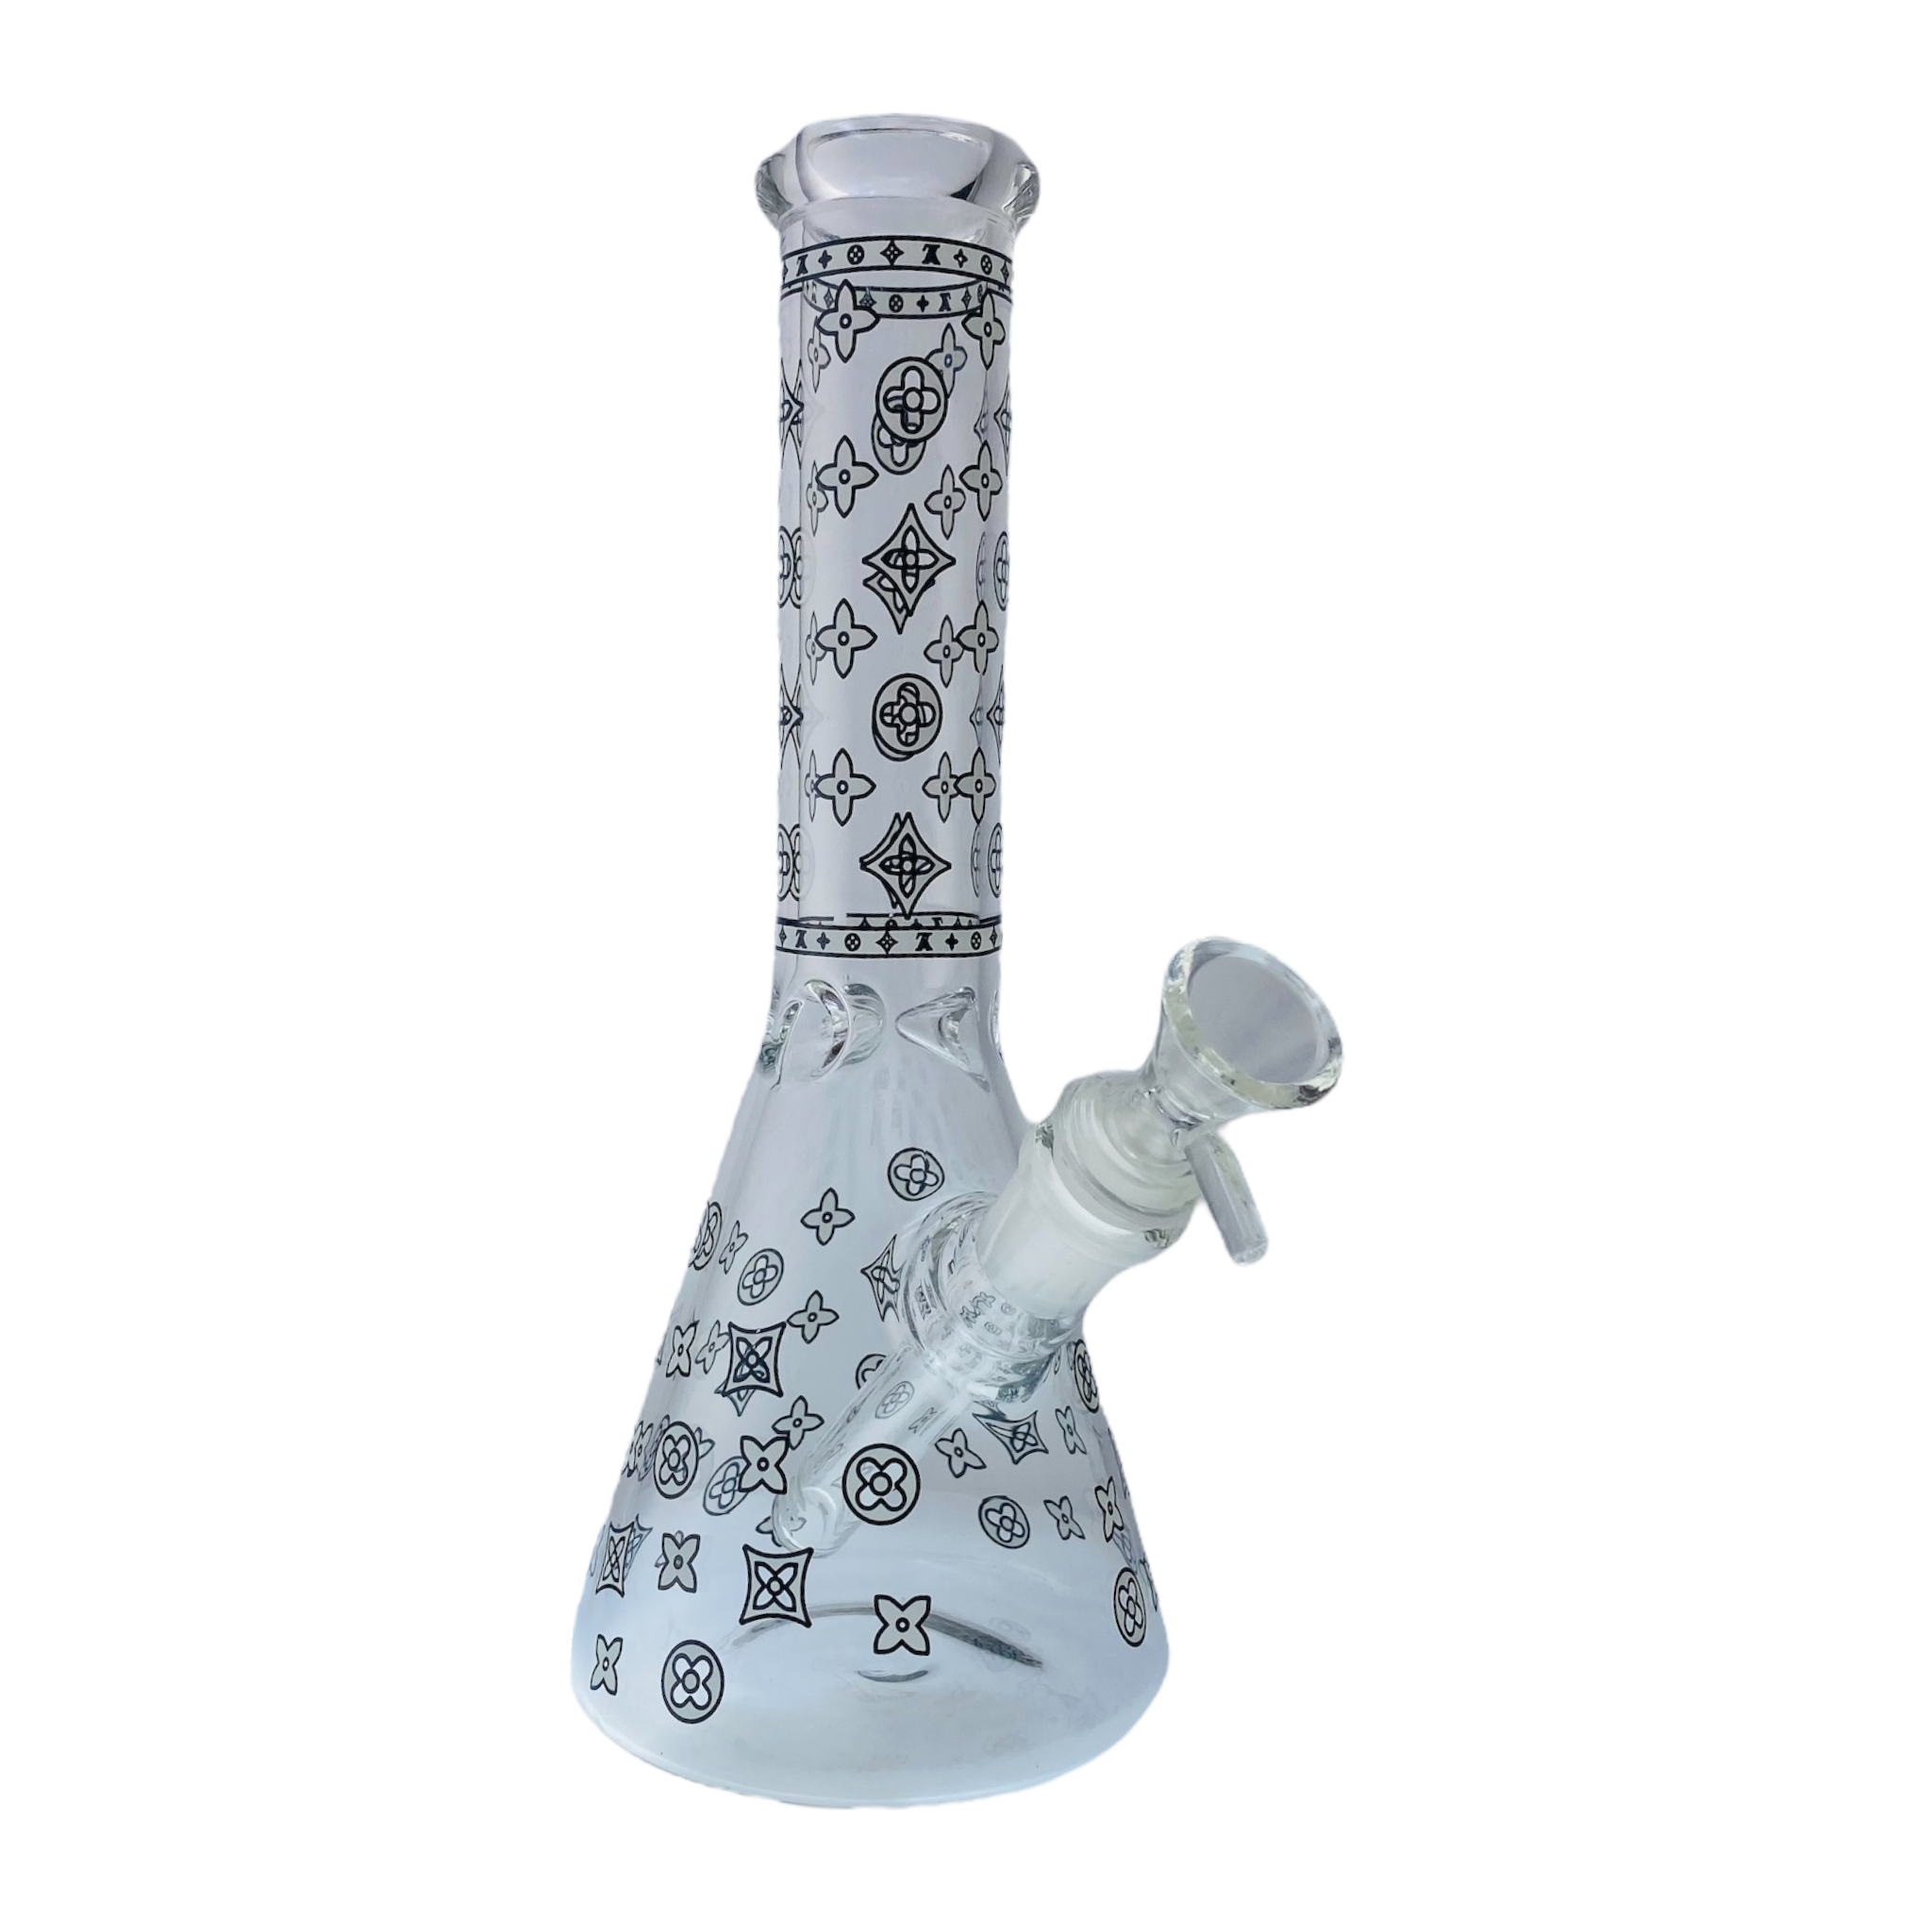 mini Beaker Bong Water Pipe With Decorative Symbols